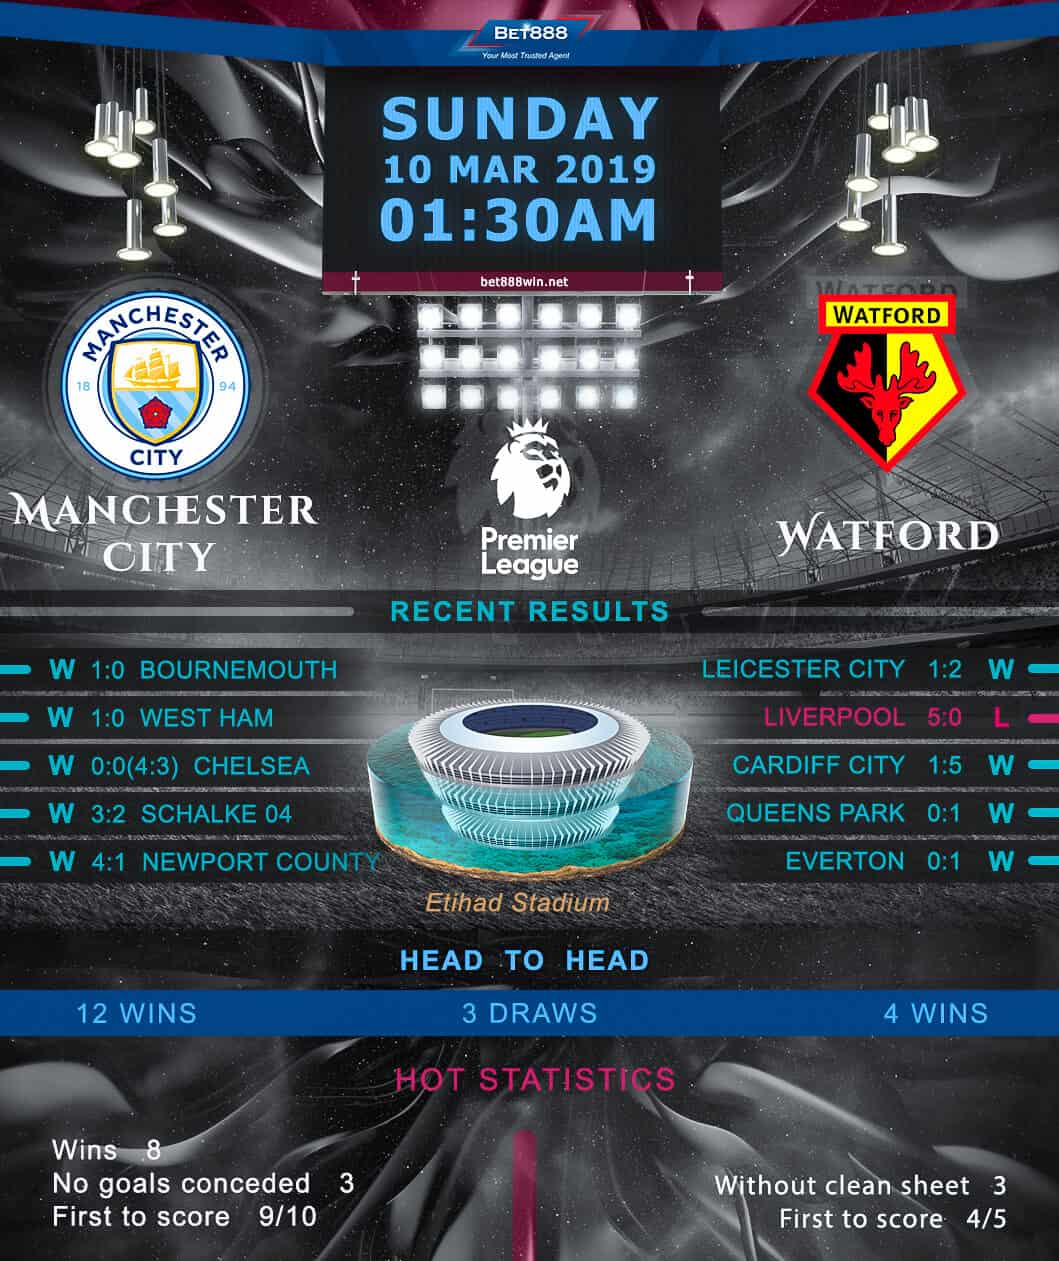 Manchester City vs Watford 10/03/19